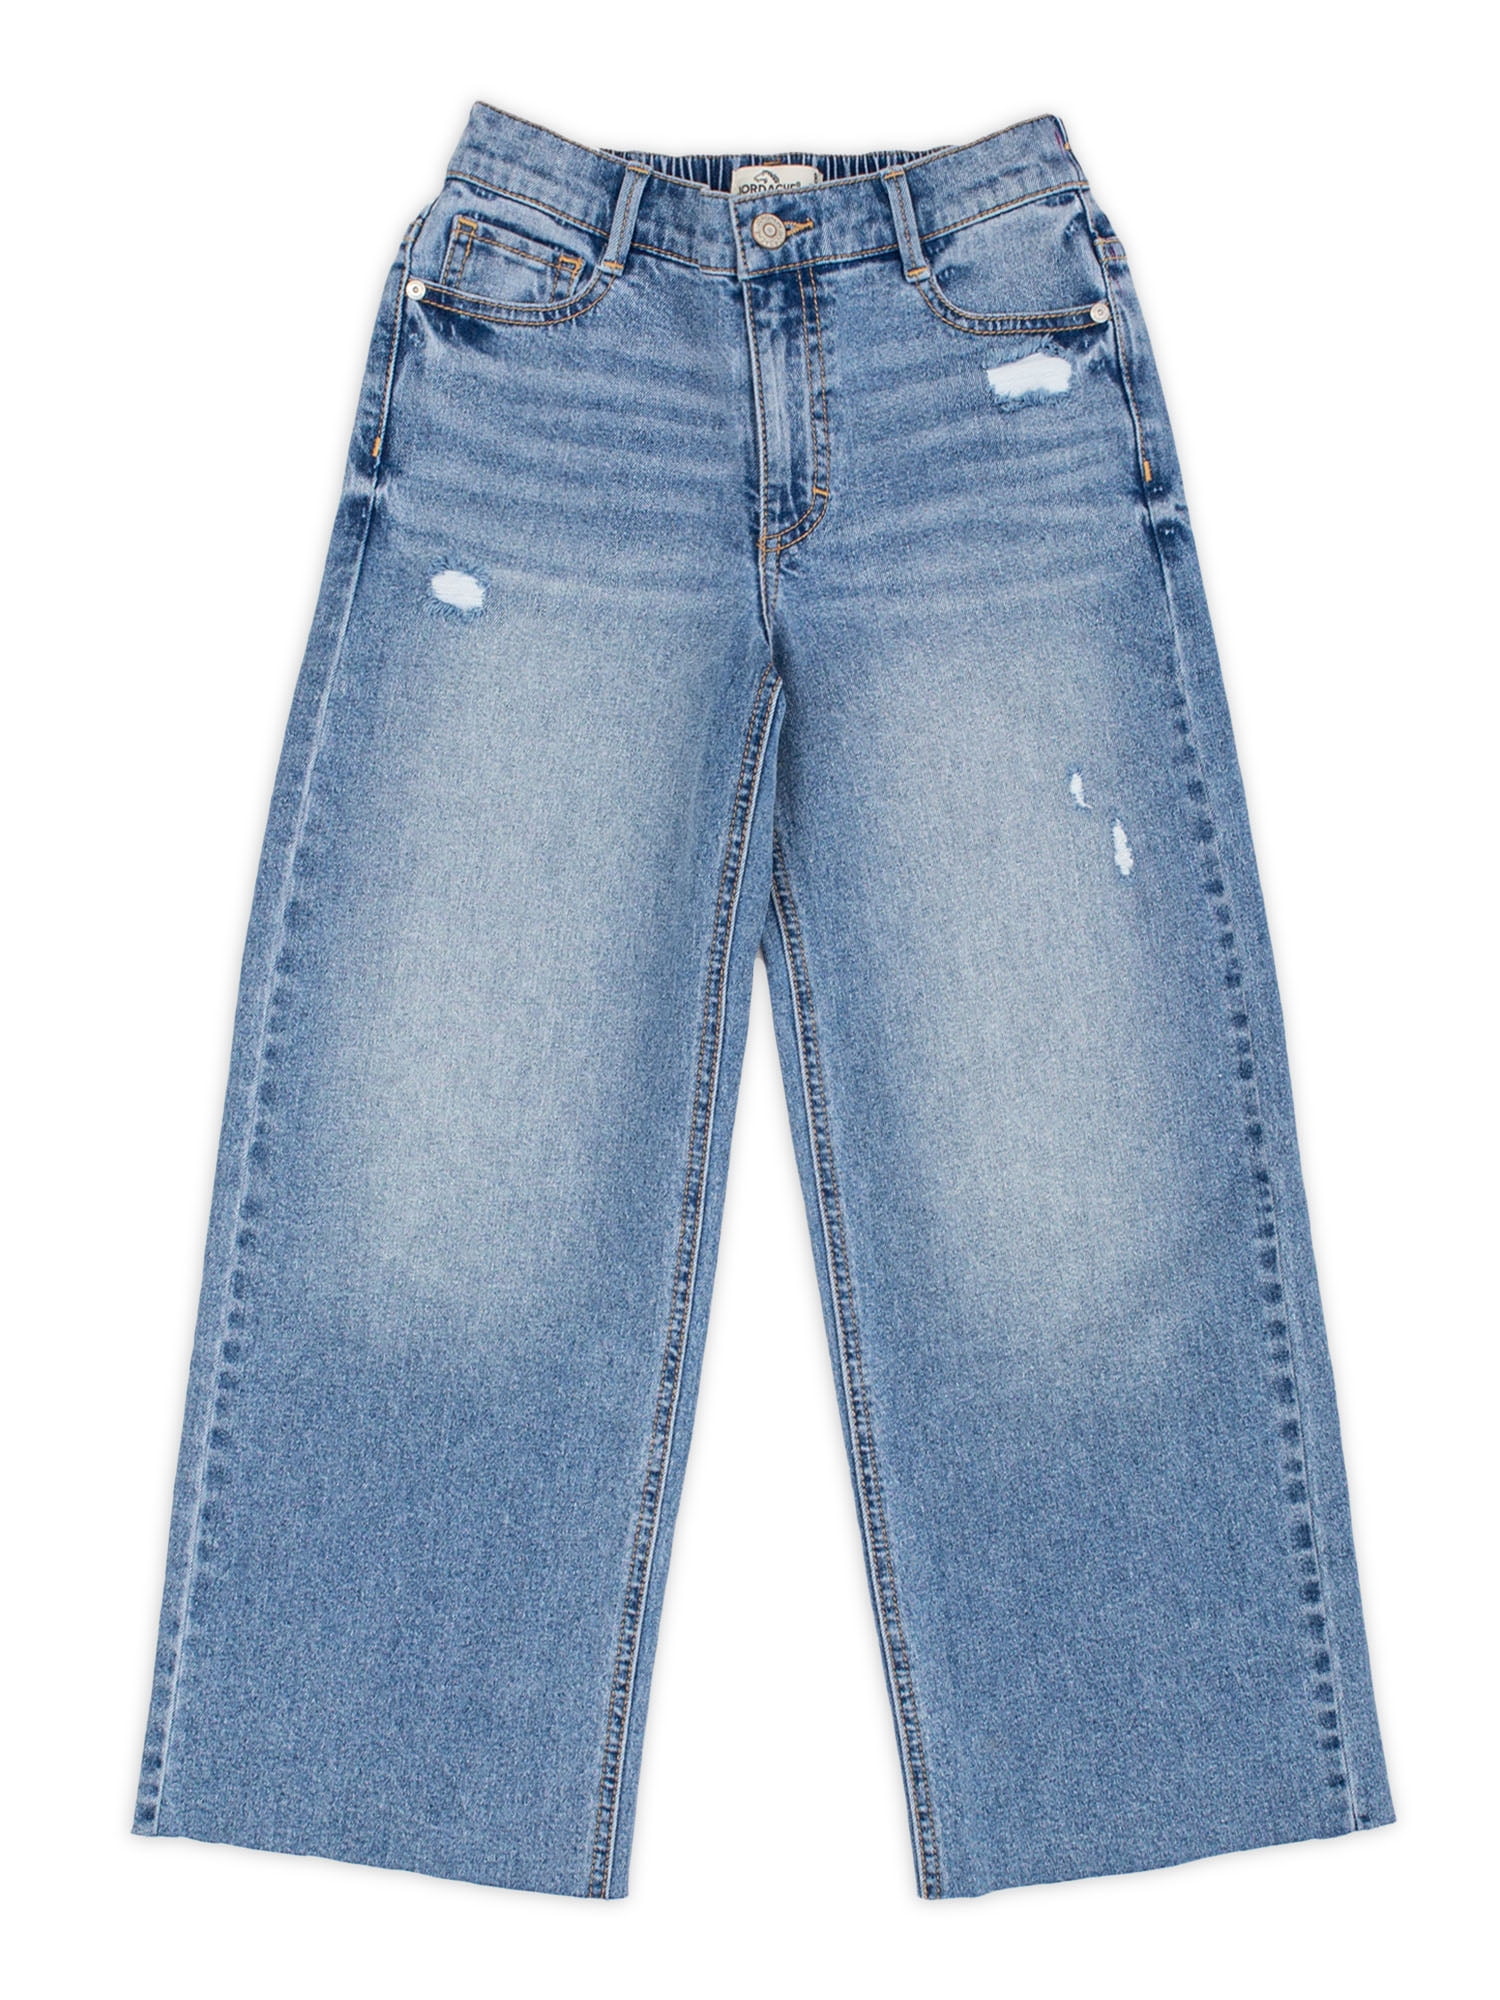 Jordache Girls Wide Leg Jeans, Sizes 5-18 - Walmart.com